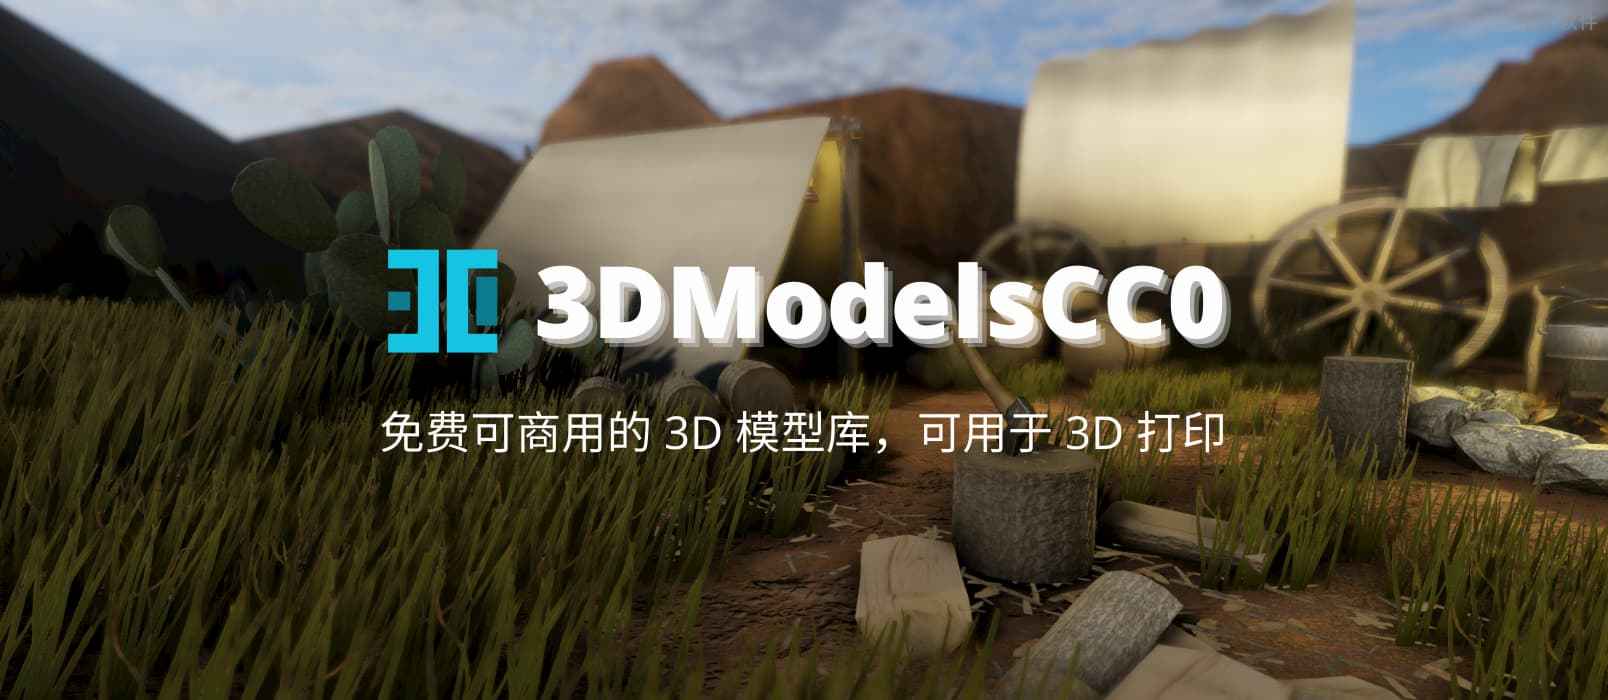 3DModelsCC0 – 免费可商用的 3D 模型库，可用于 3D 打印